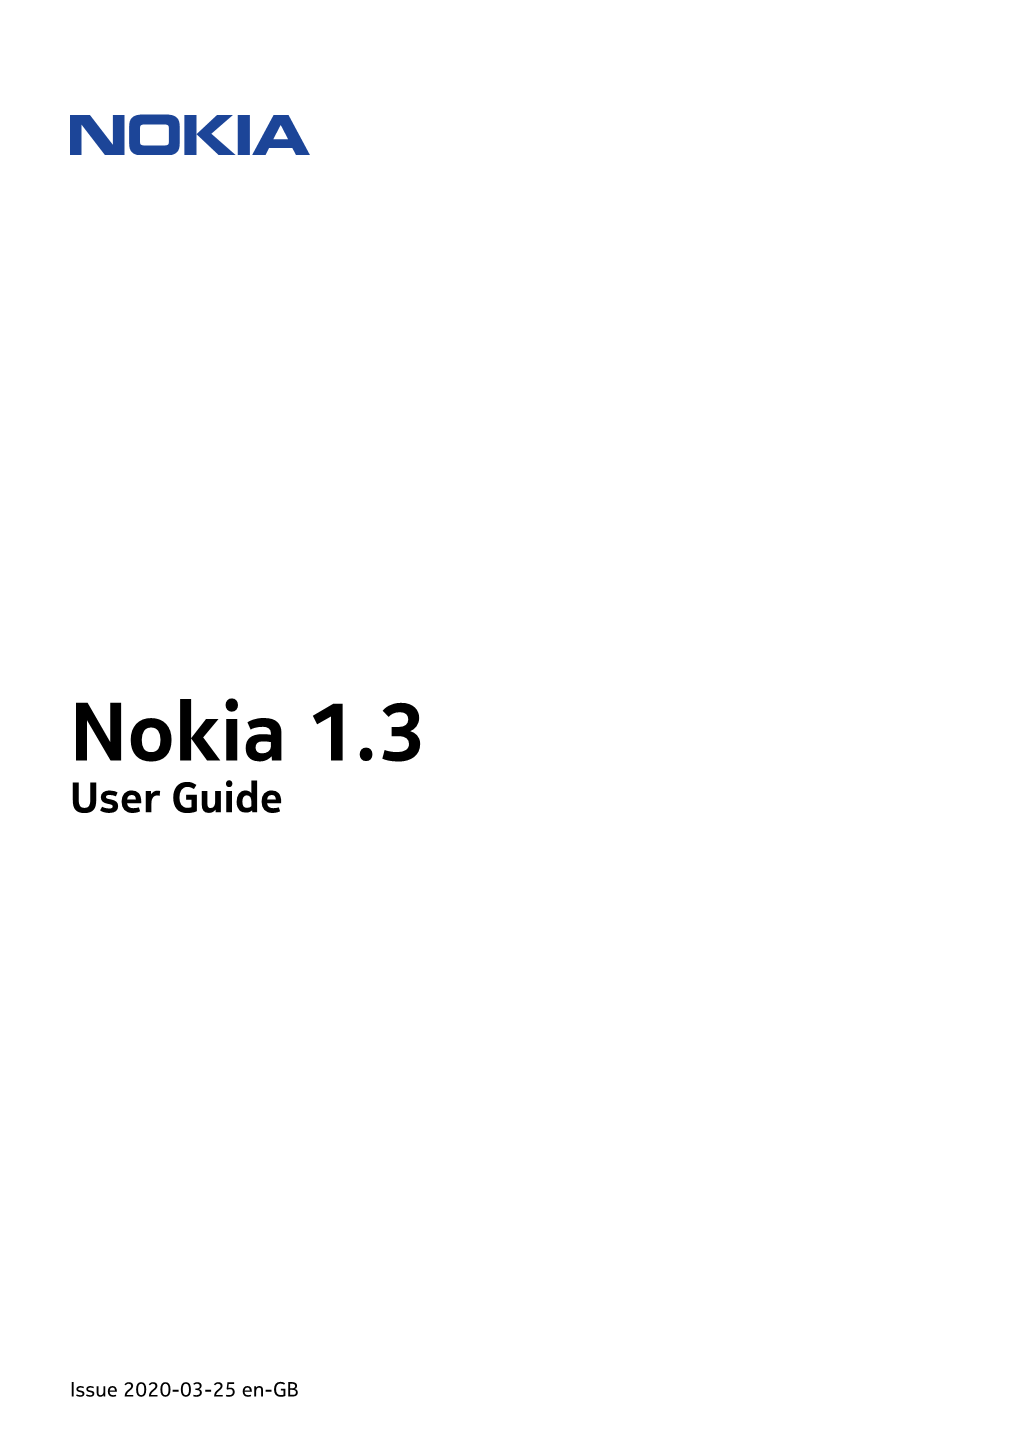 Nokia 1.3 User Guide